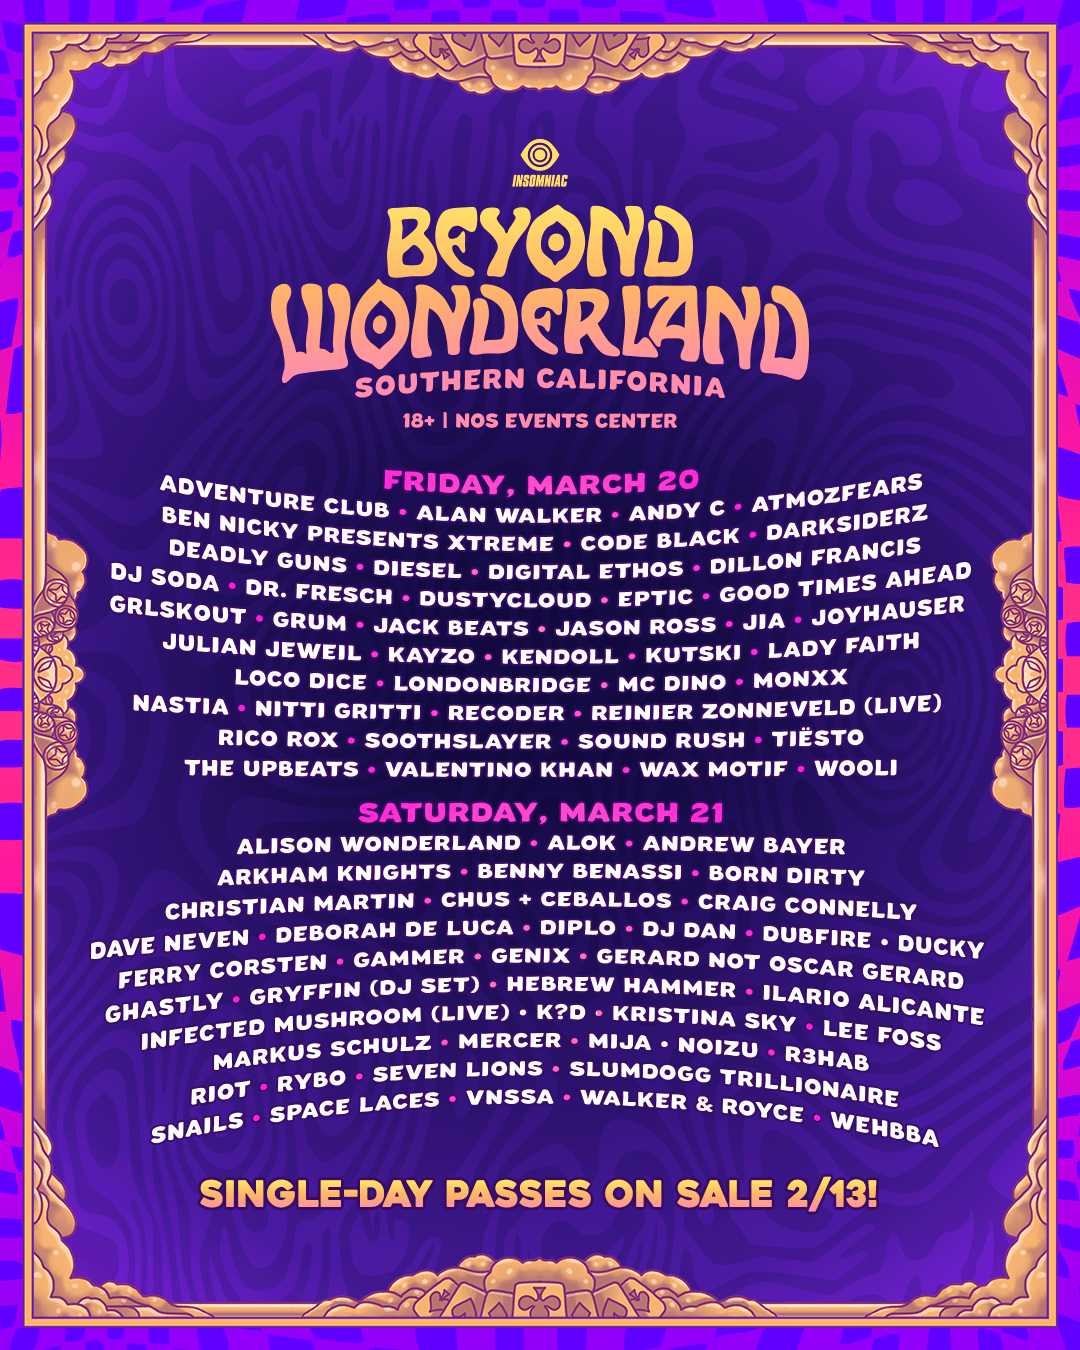 Beyond Wonderland 2020 lineup